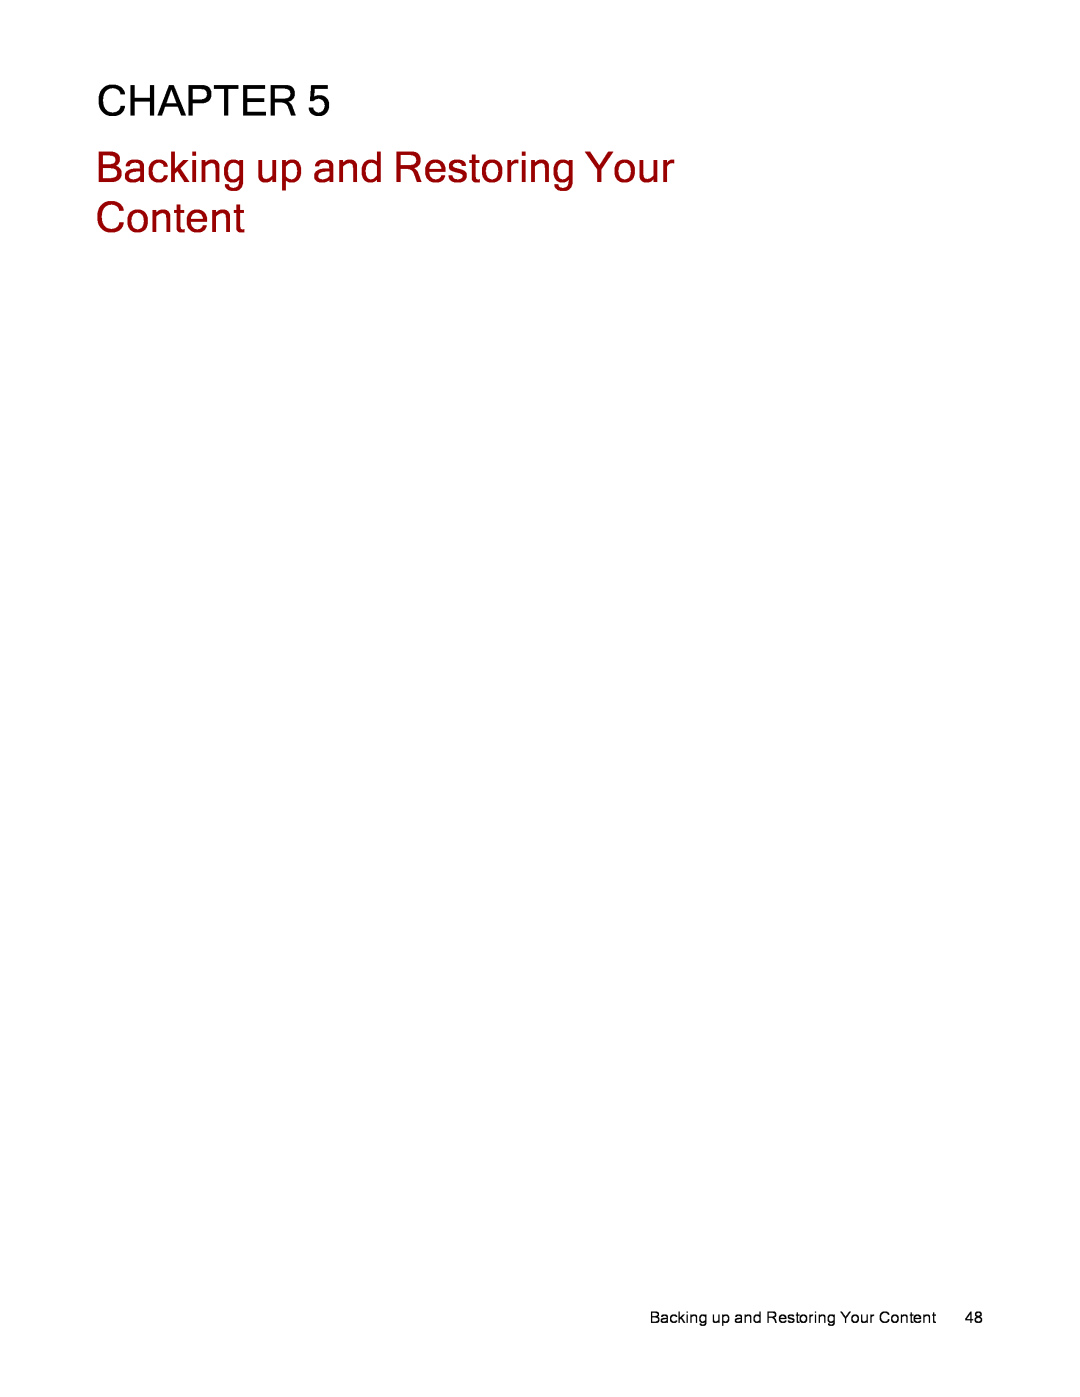 Lenovo 70B89001NA, 70B89003NA, 70B89000NA manual Backing up and Restoring Your Content, Chapter 